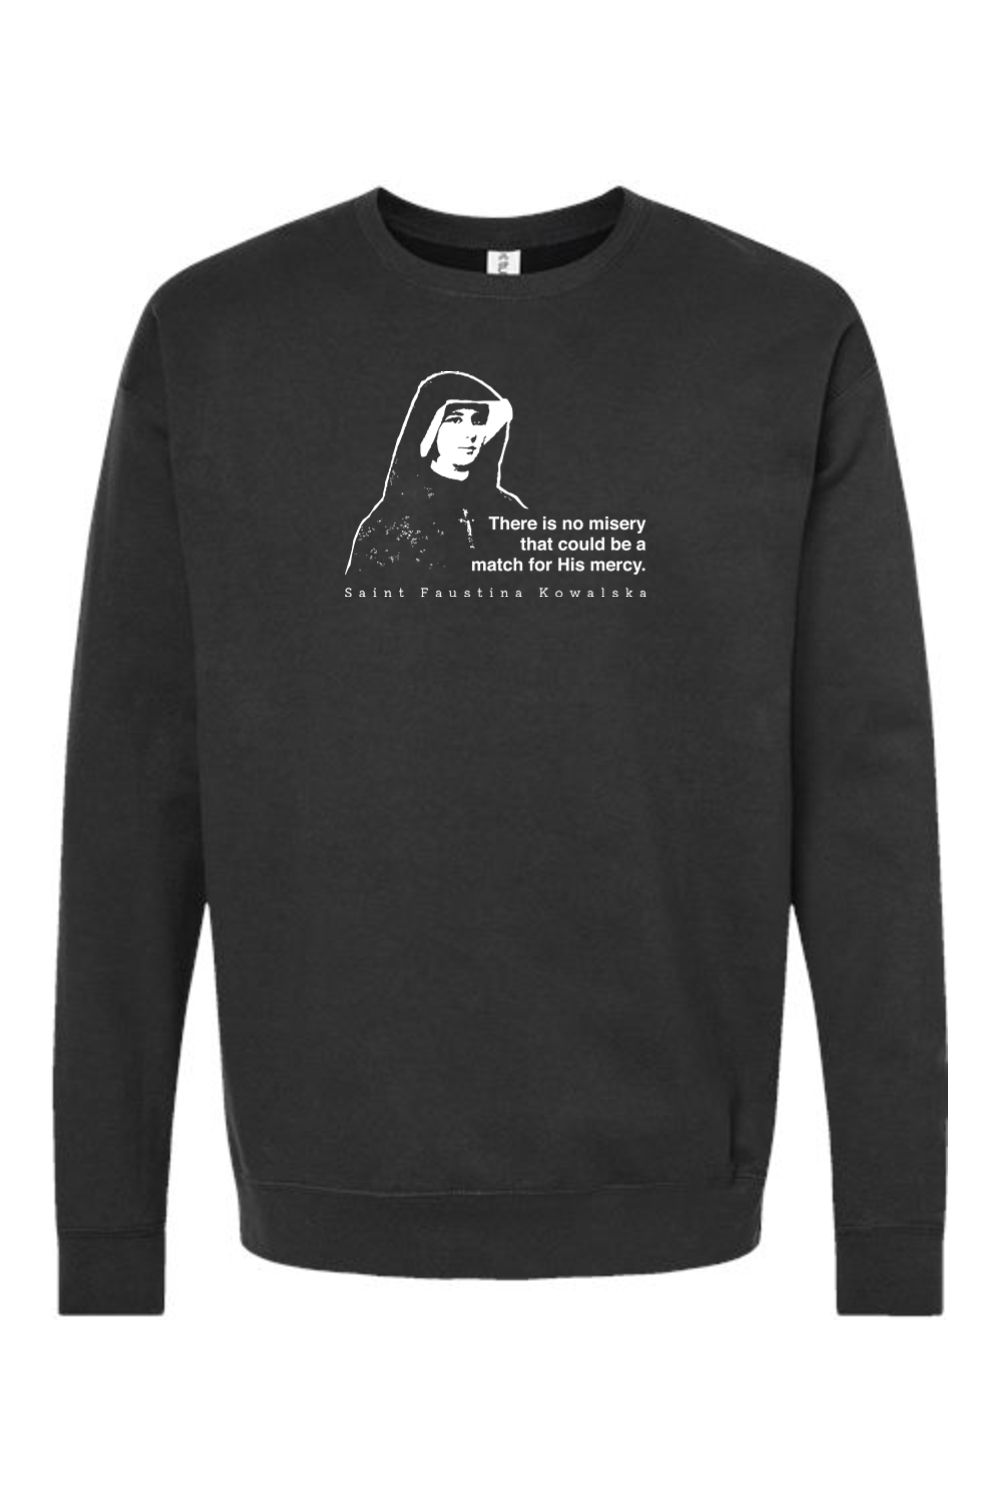 Mercy Message - St. Faustina Kowalska Crewneck Sweatshirt